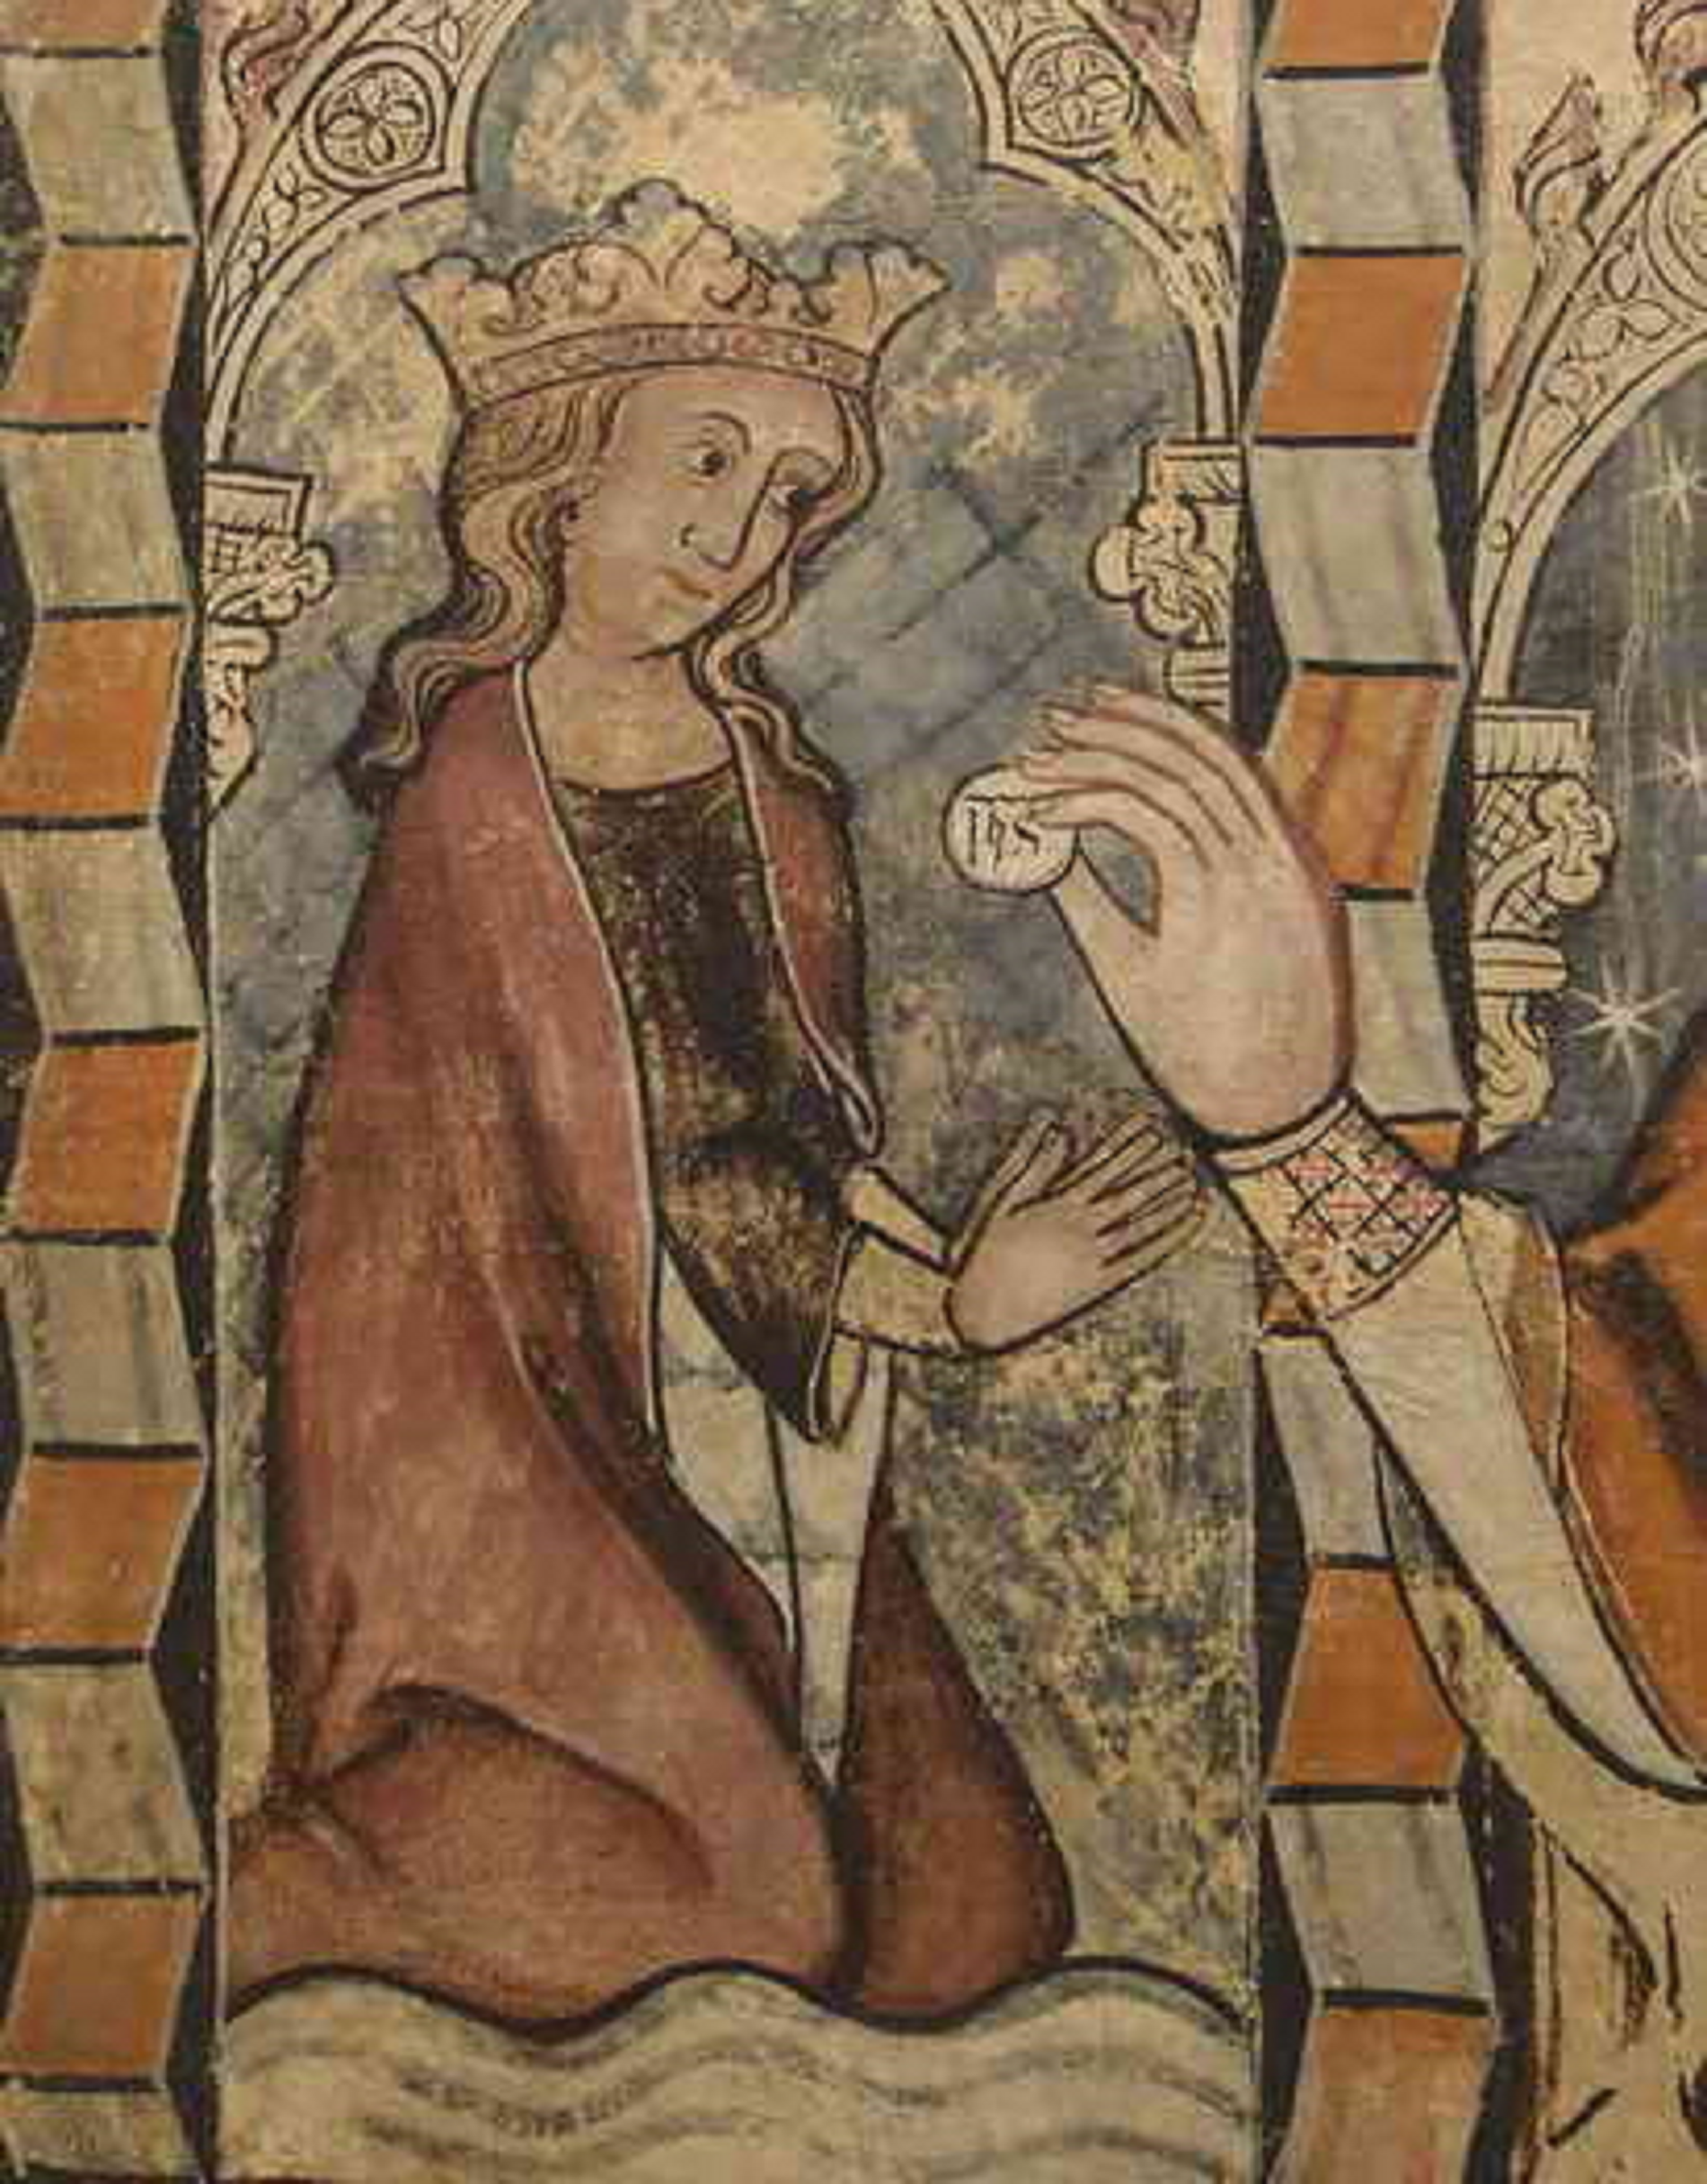 Sibila de Fortià, ¿una reina bruja o solo una incómoda madrastra?